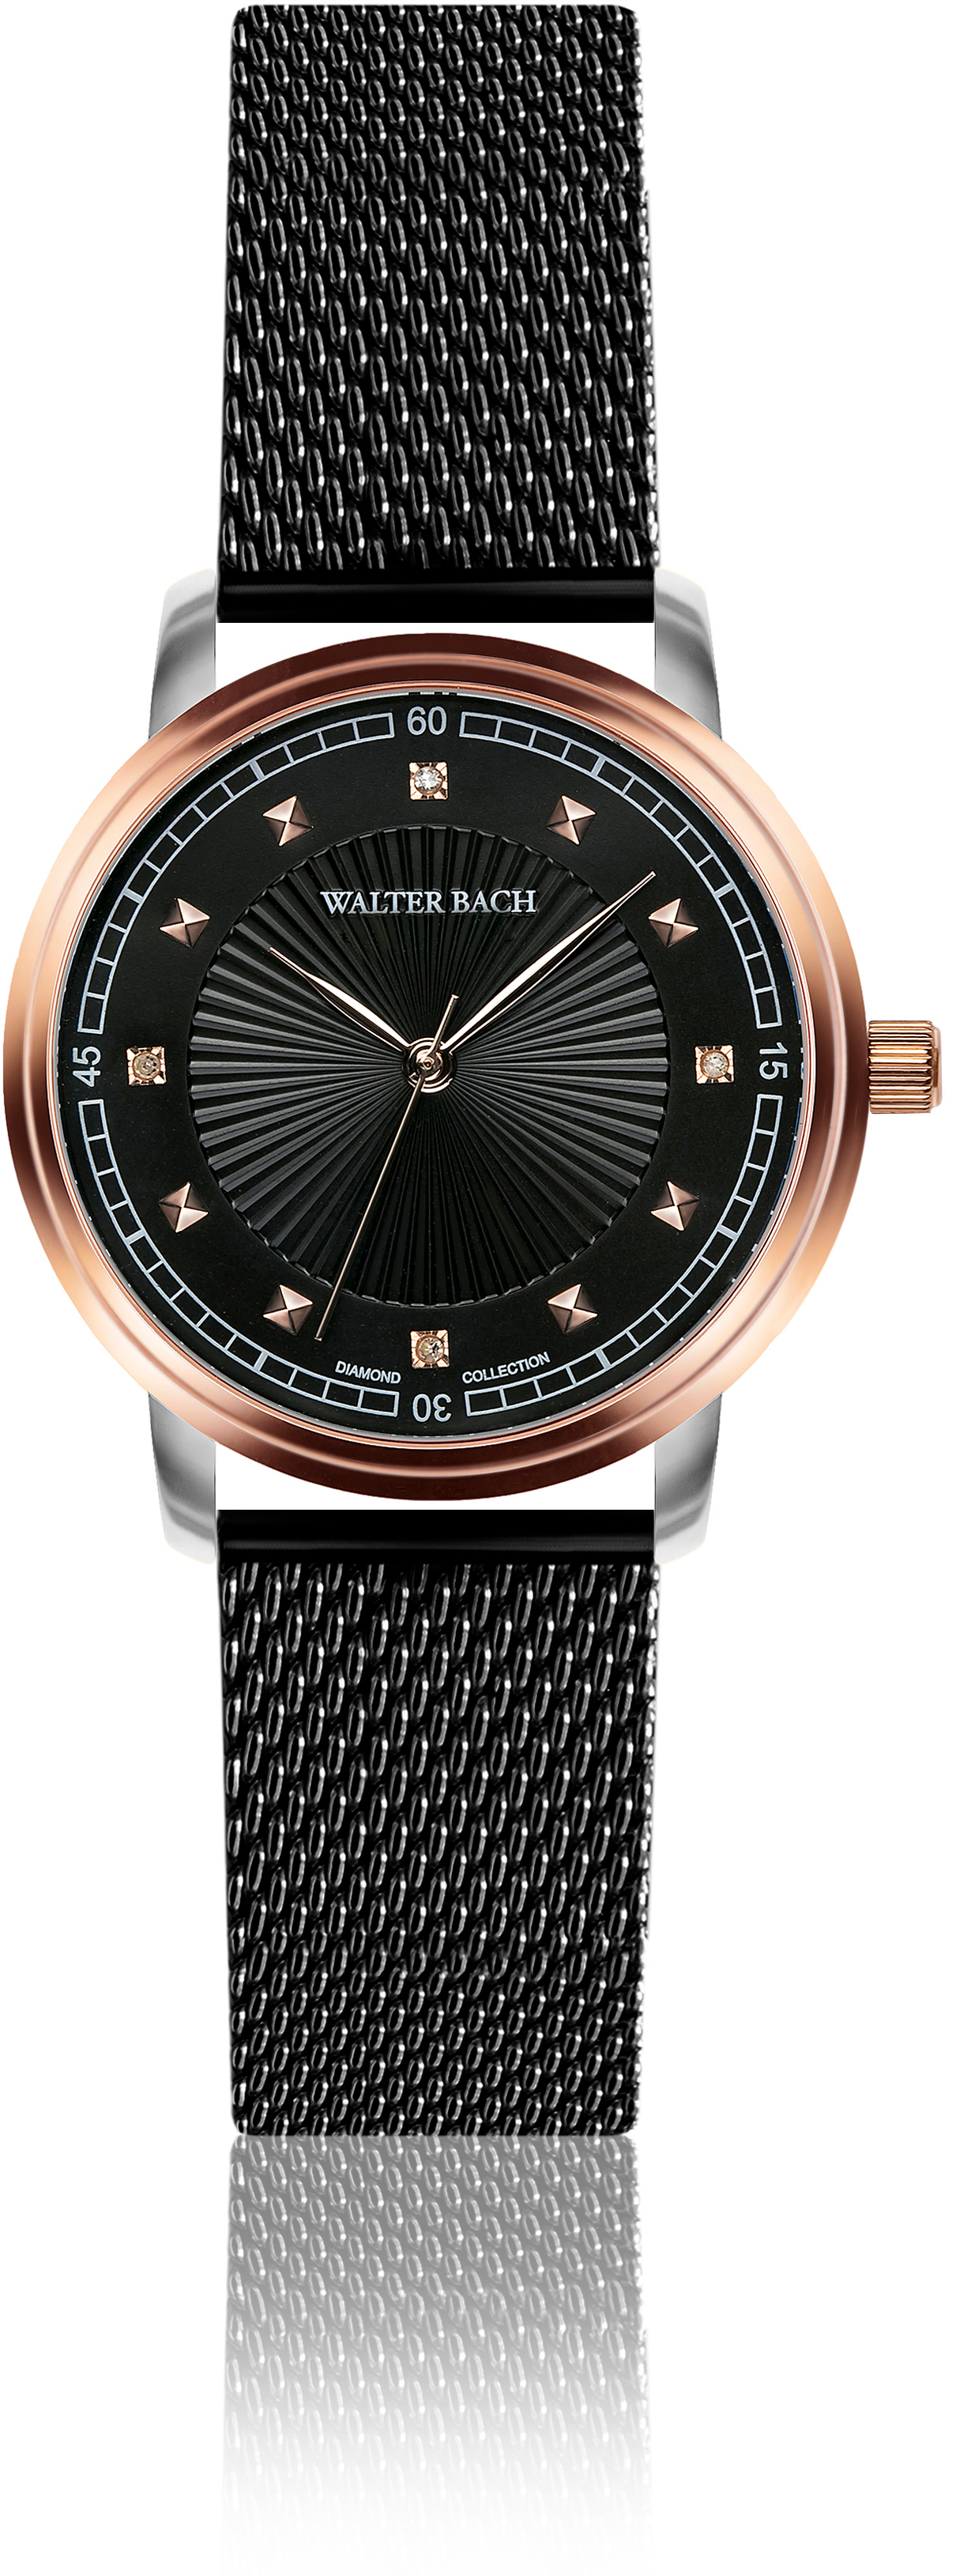 Walter Bach BAI-3318